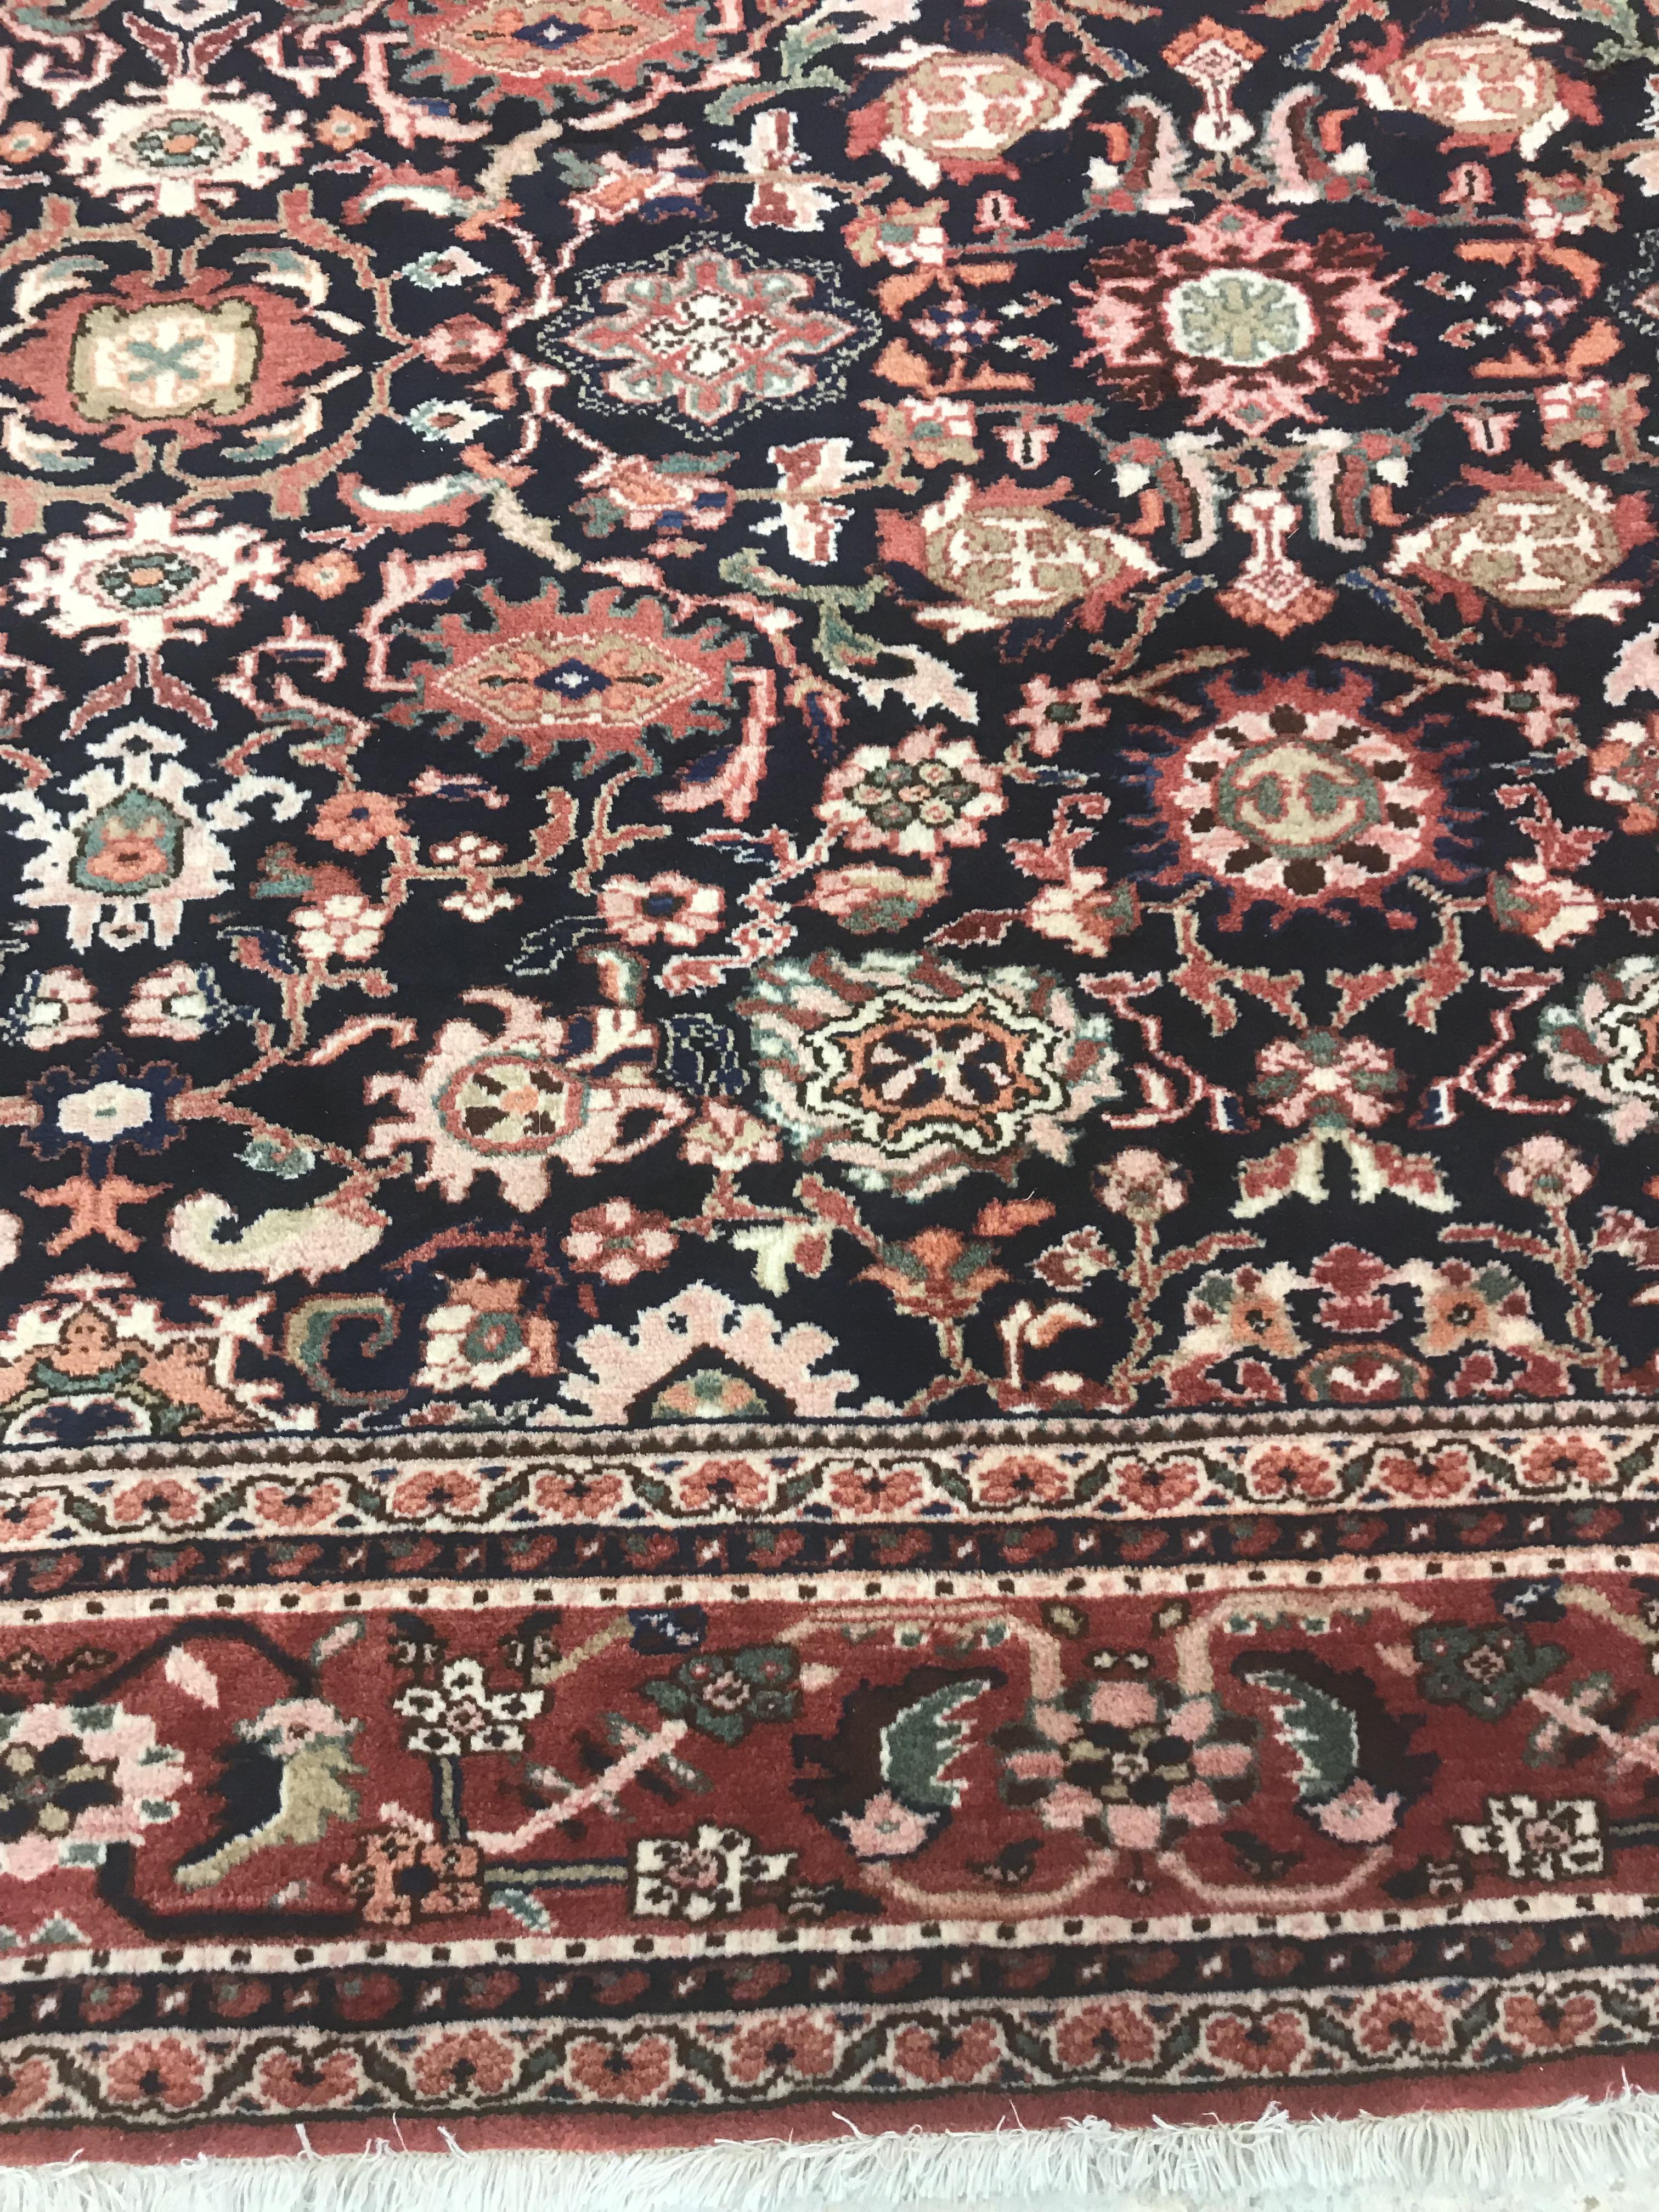 A 20th Century Afghan Kazak carpet, - Image 4 of 36